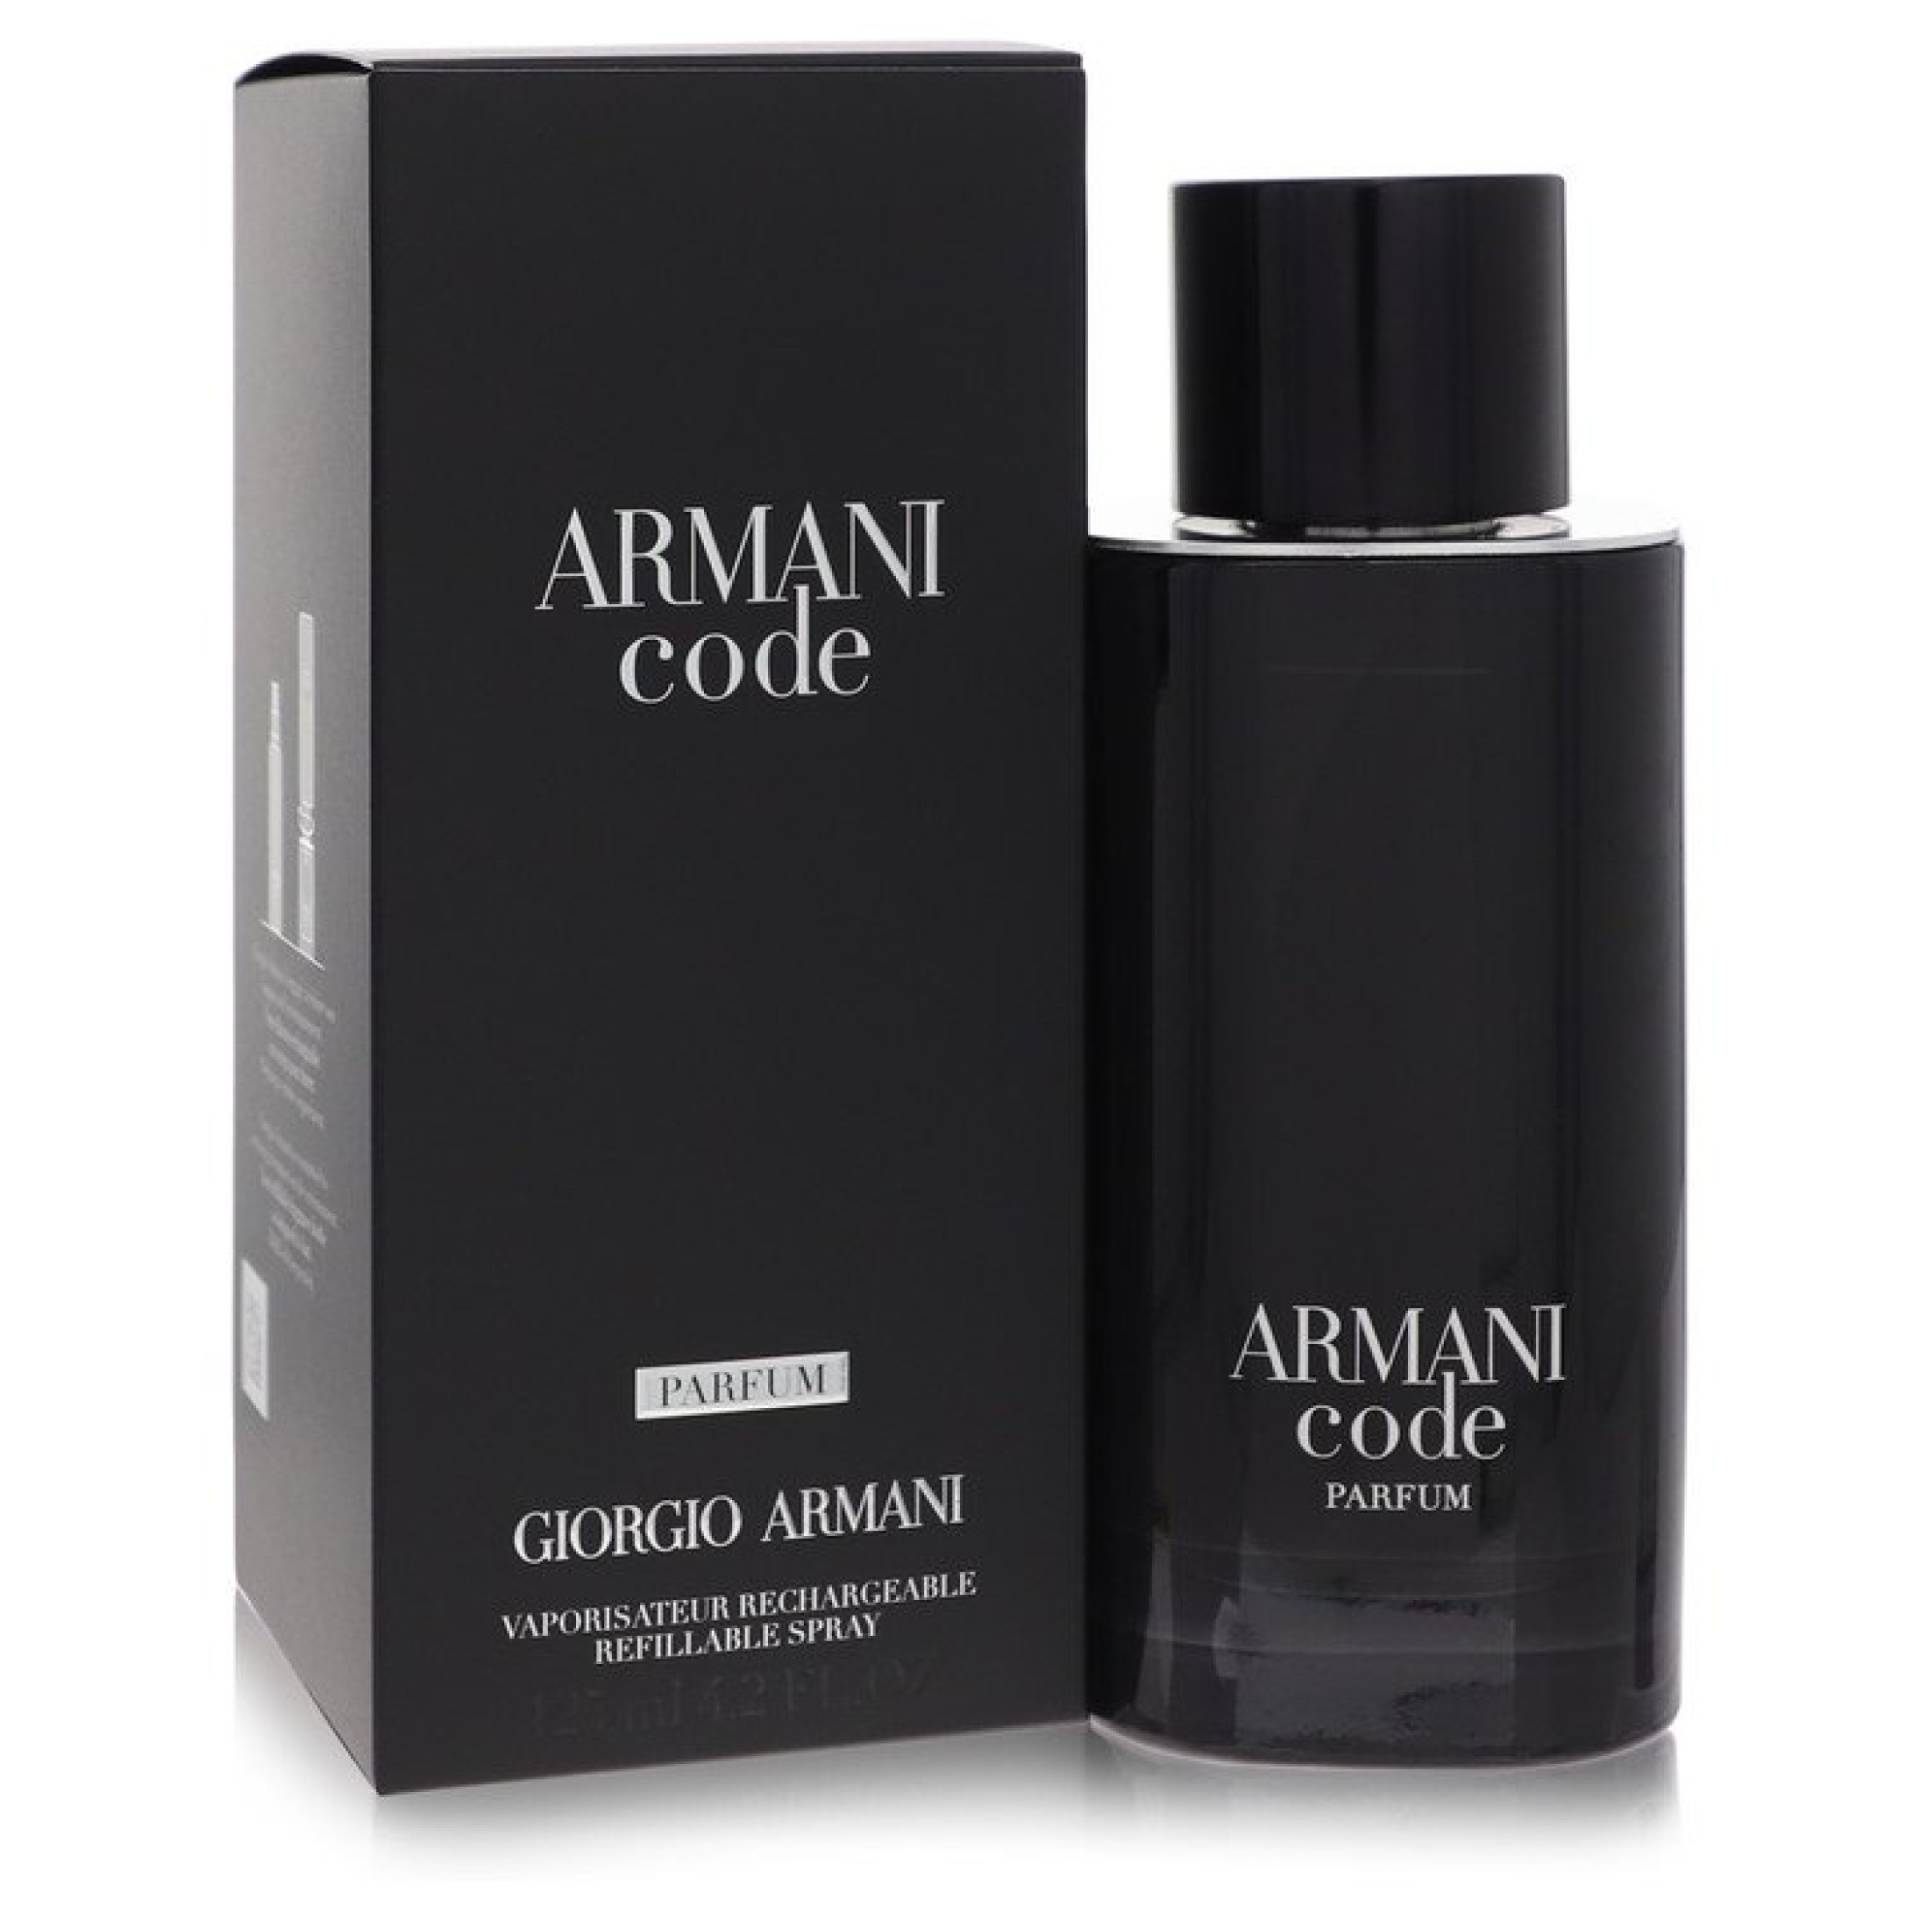 Giorgio Armani Armani Code Eau De Parfum Spray Refillable 125 ml von Giorgio Armani